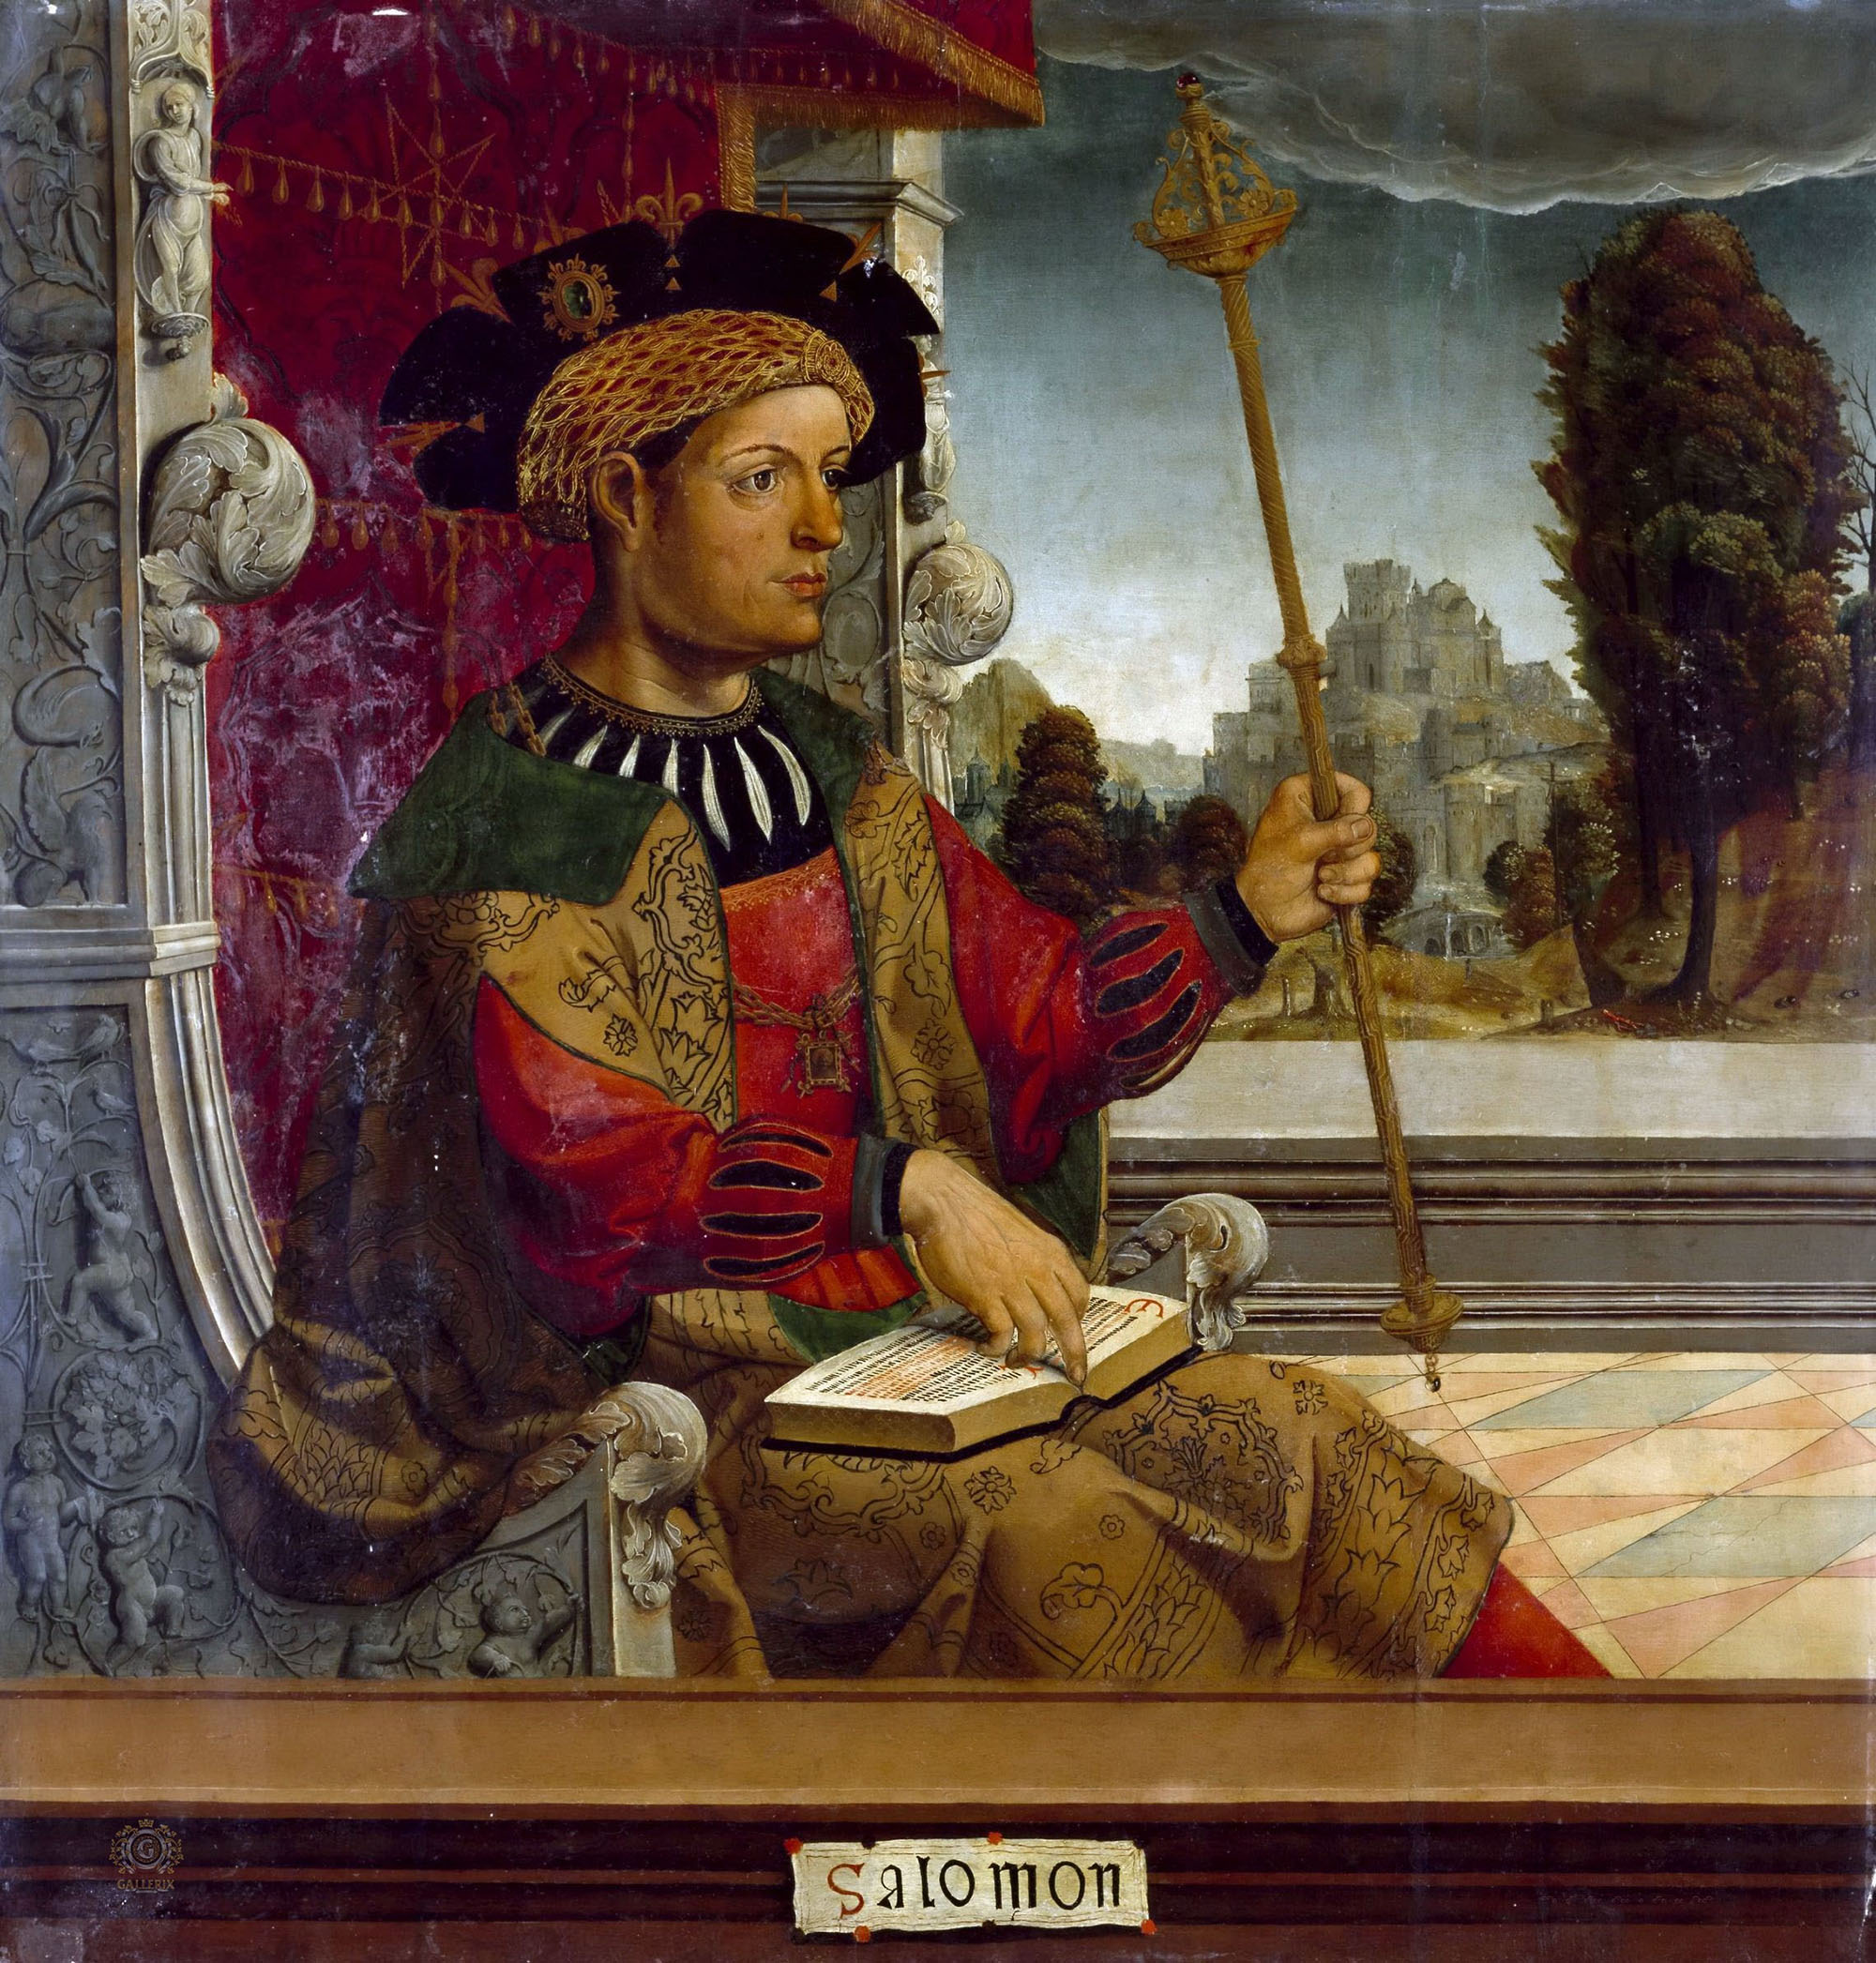 Мастер Бесерриль. "Царь Соломон". 1525. Музей Прадо, Мадрид.